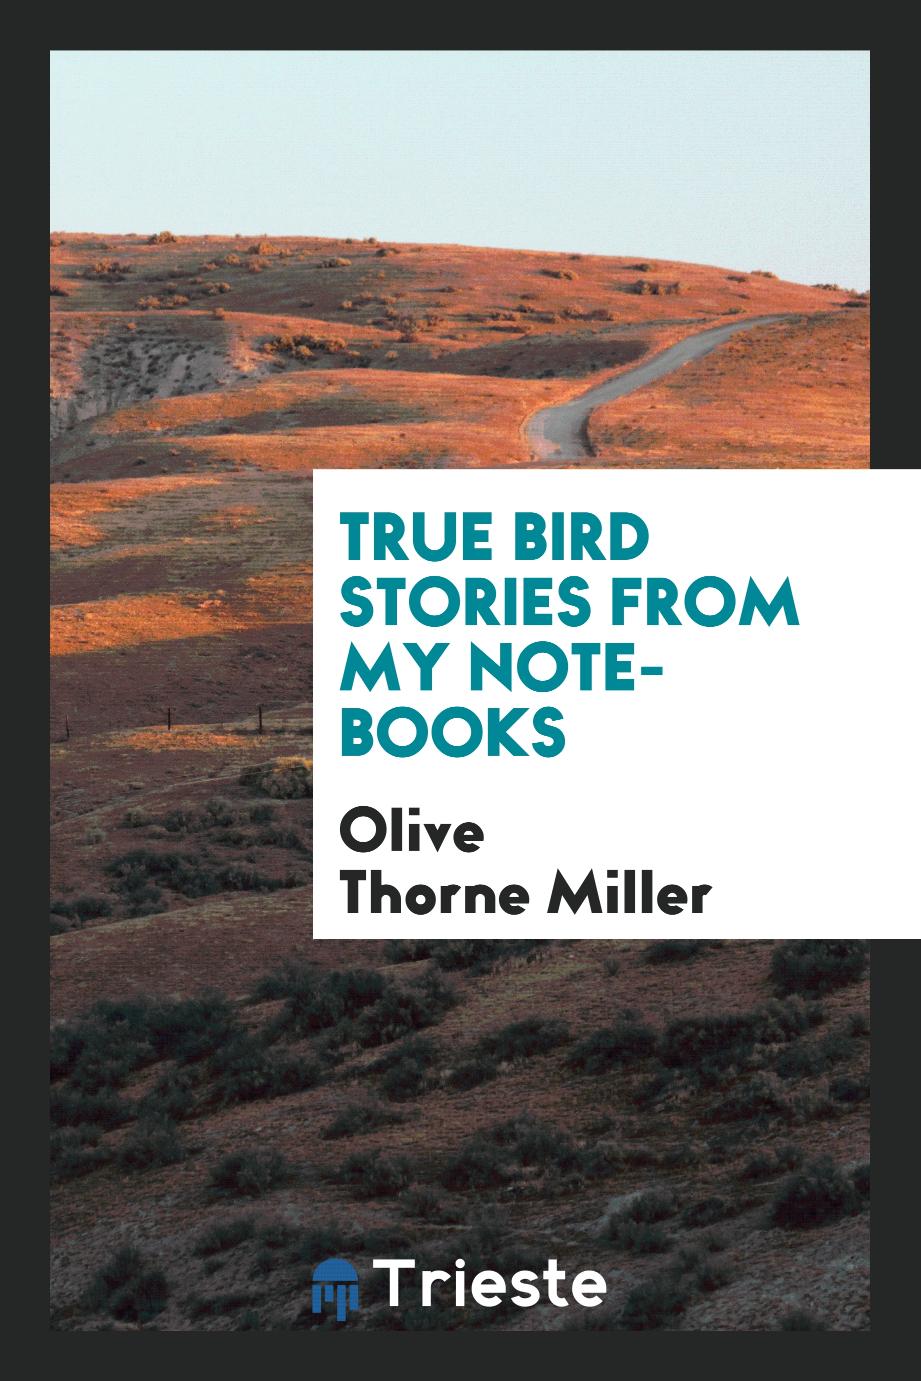 True bird stories from my note-books